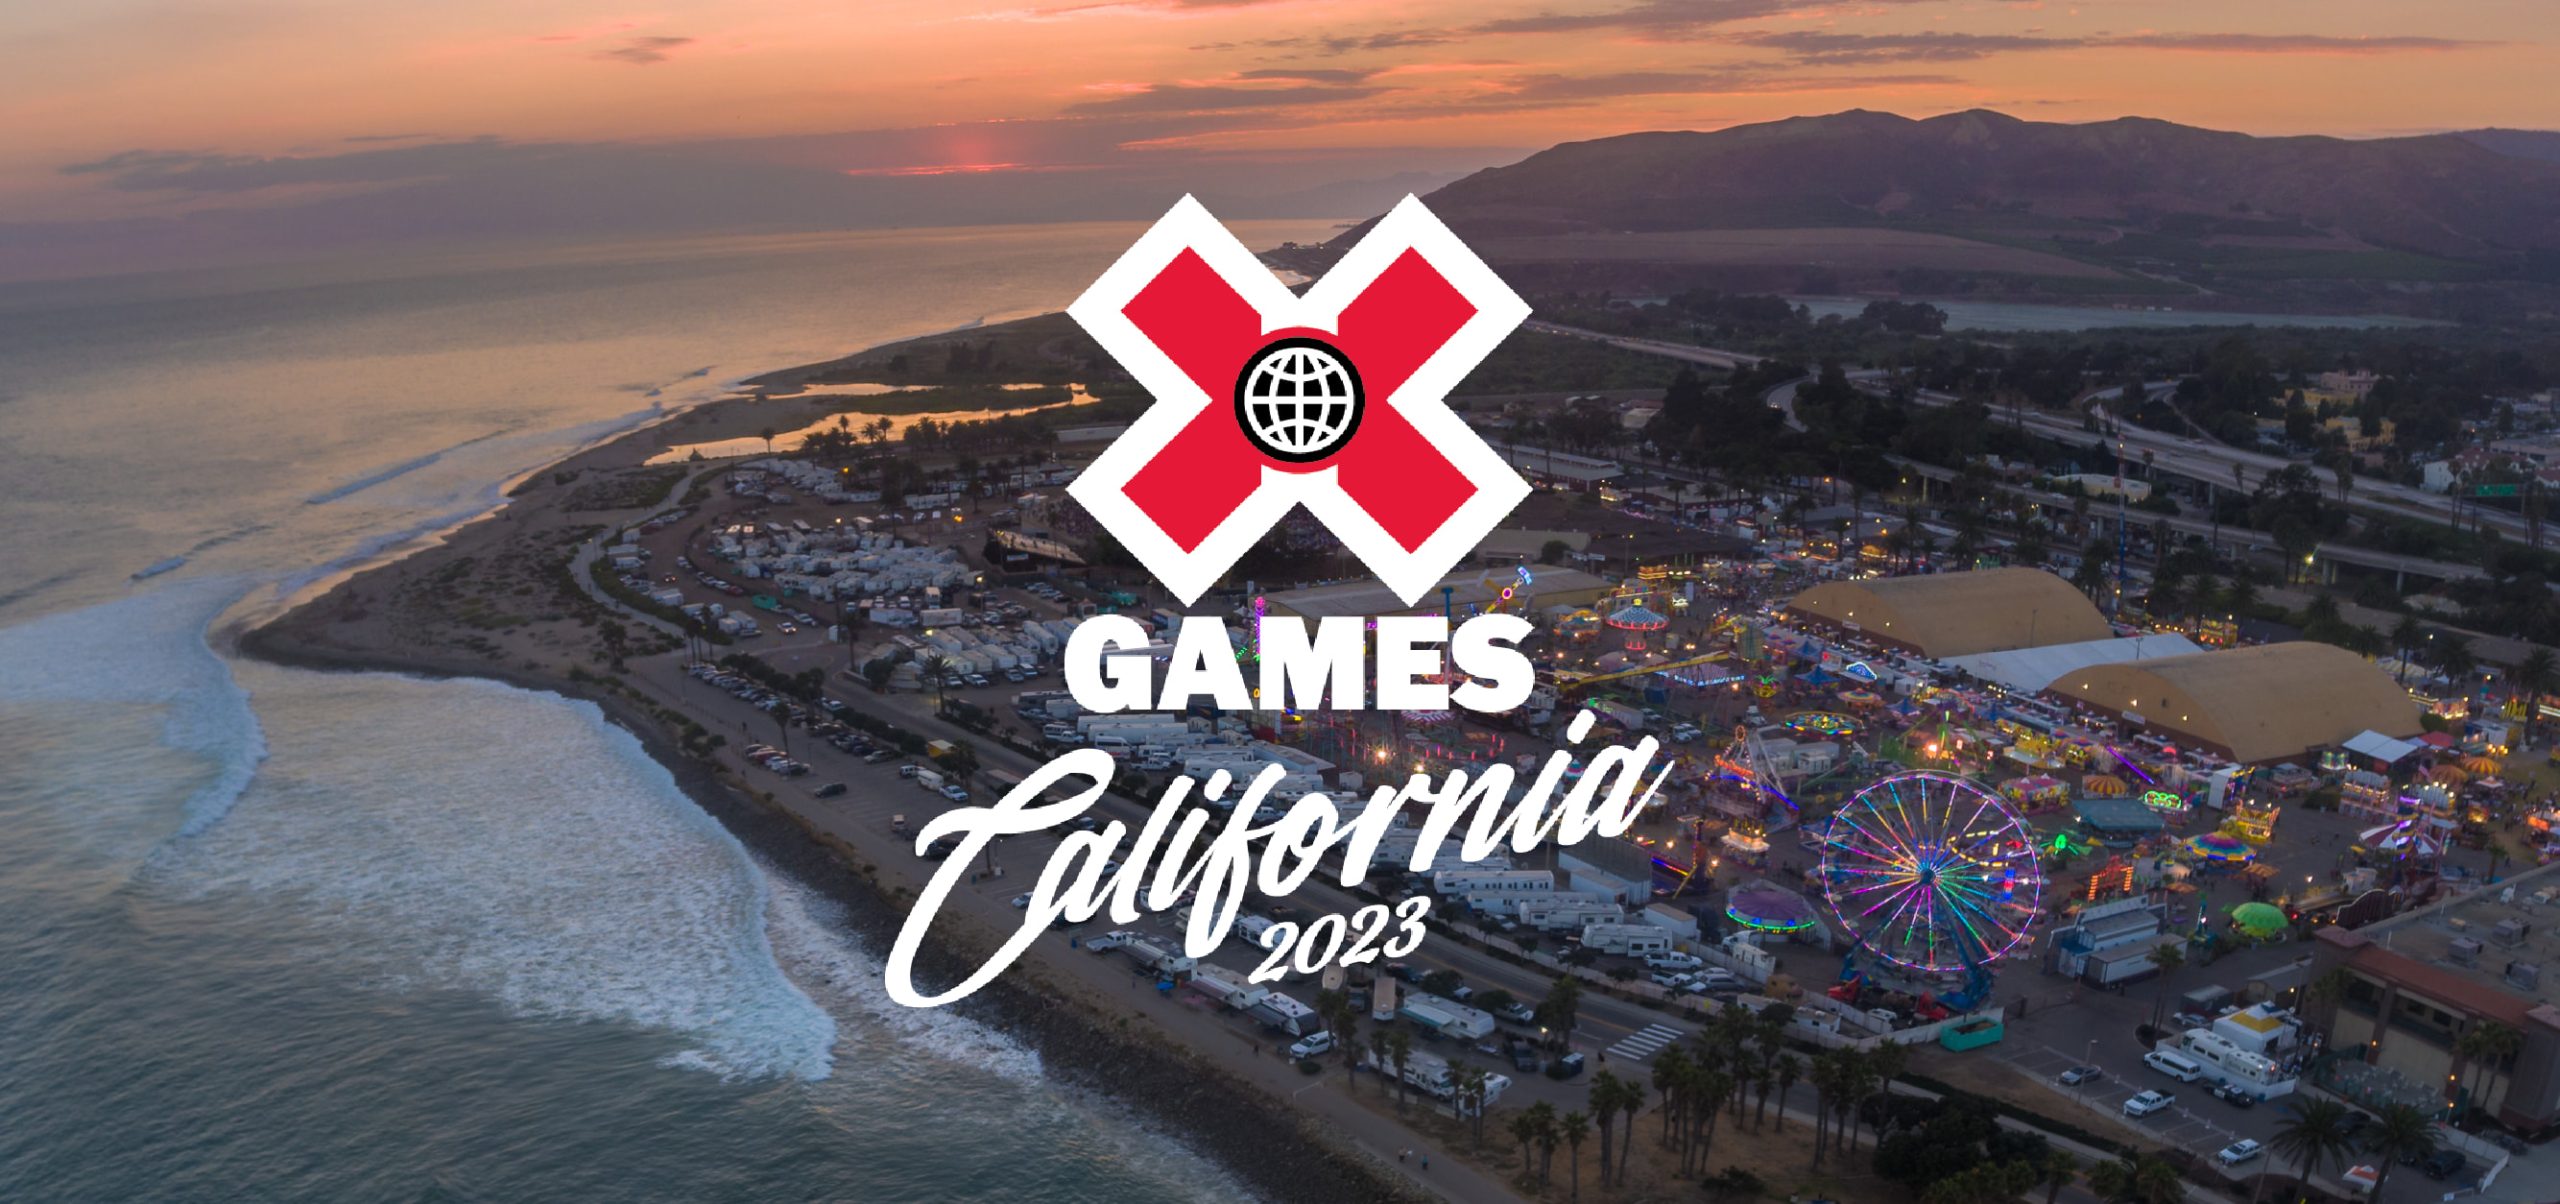 X Games California 2023 Competition Finals Begin Thursday on ESPN - ESPN  Press Room U.S.